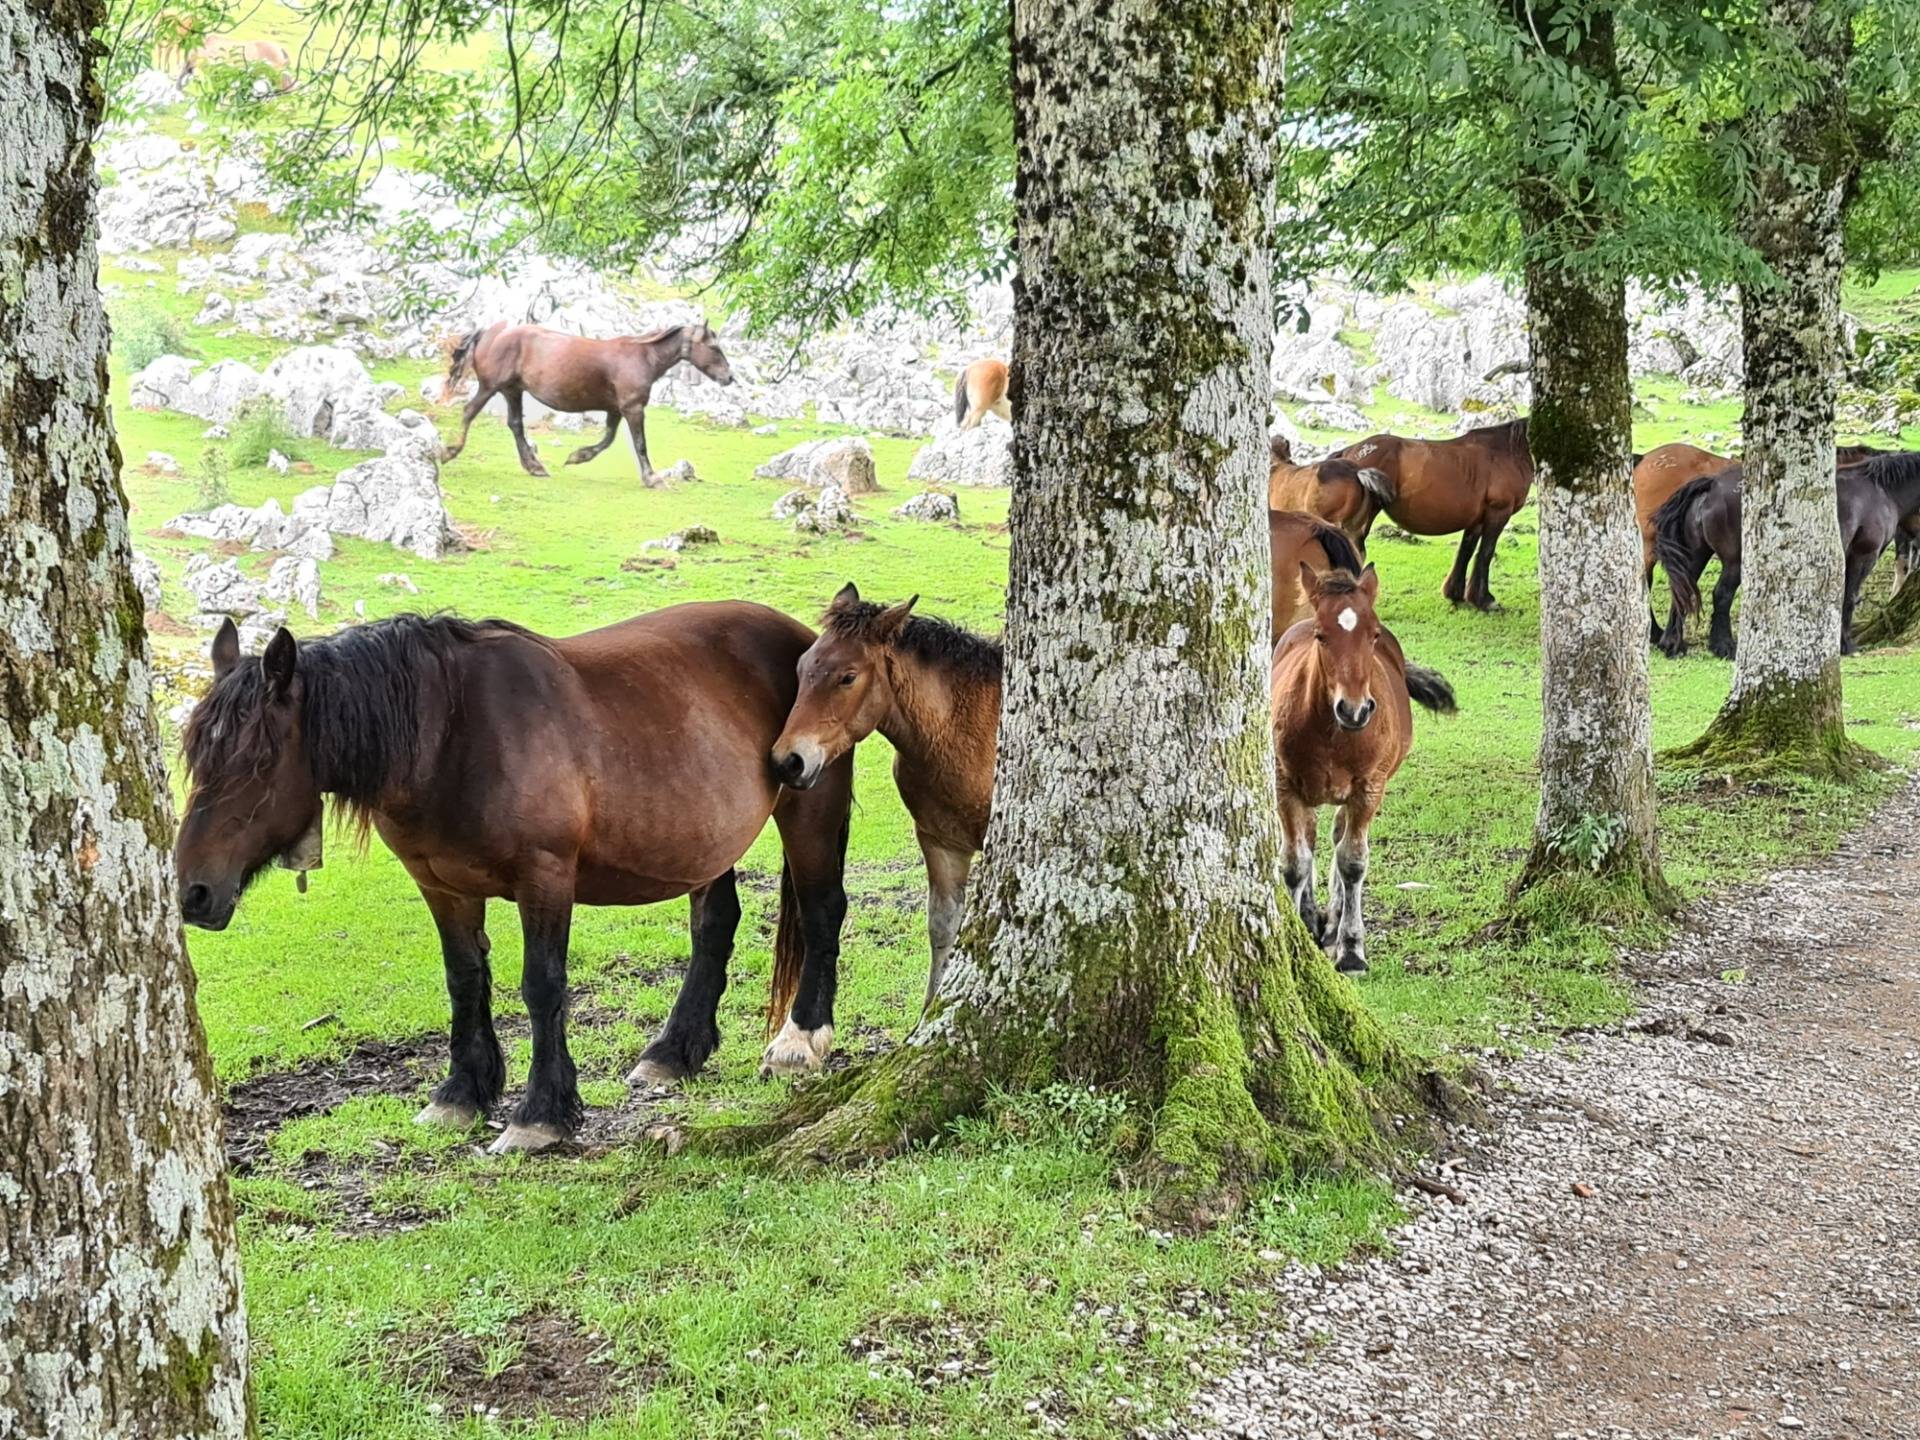 Basque Mountain horse breed profile, facts, lifespan, traits, training, habitat, speed, range, diet, groom, care, standard, health, pedigree